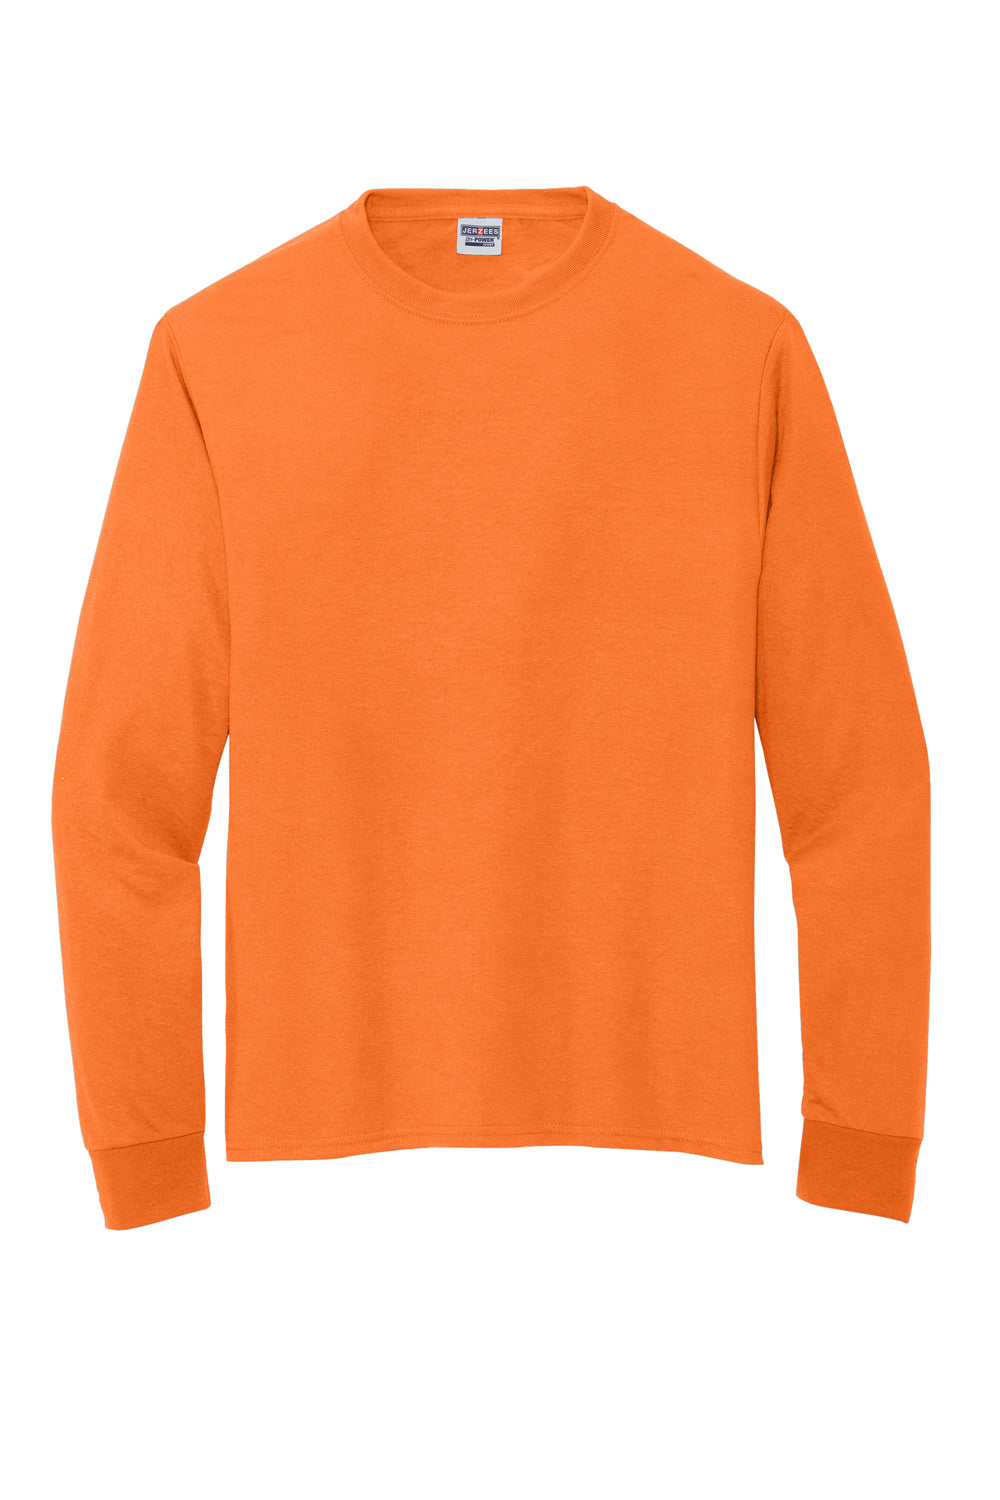 Jerzees 21LS Dri-Power Long Sleeve Crewneck T-Shirt Safety Orange Flat Front